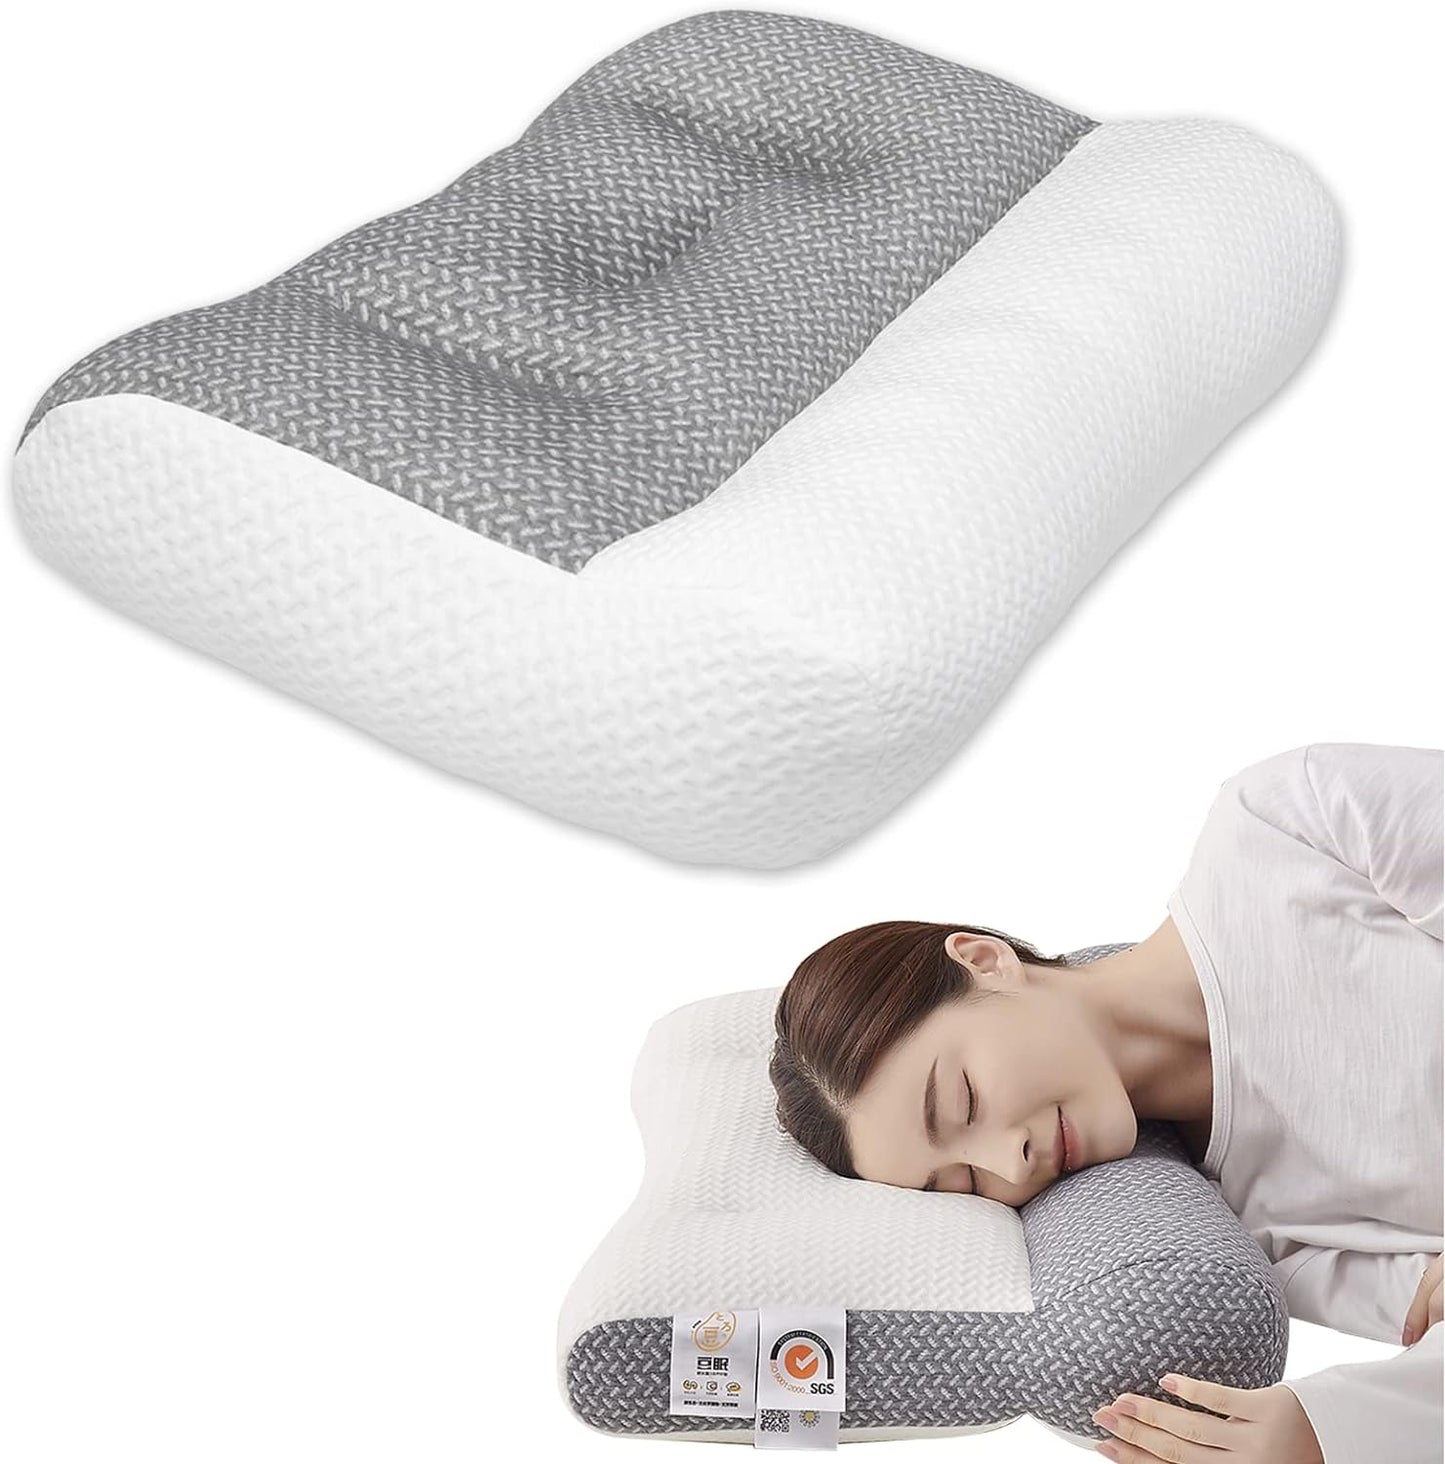 Modexto™ Ultracomfortable sleeping pillow